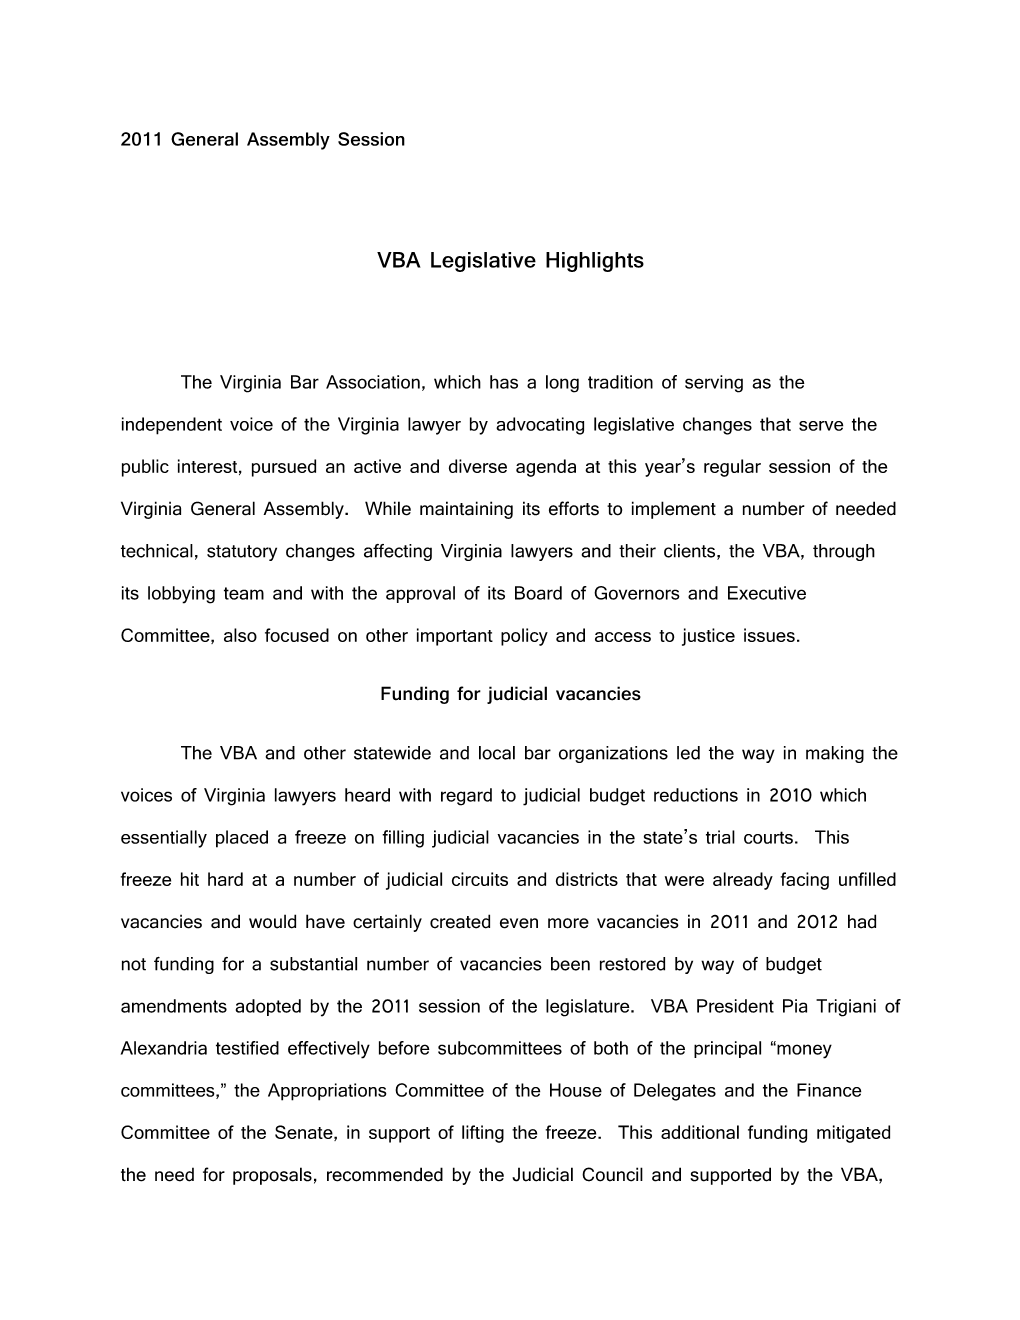 VBA Legislative Highlights